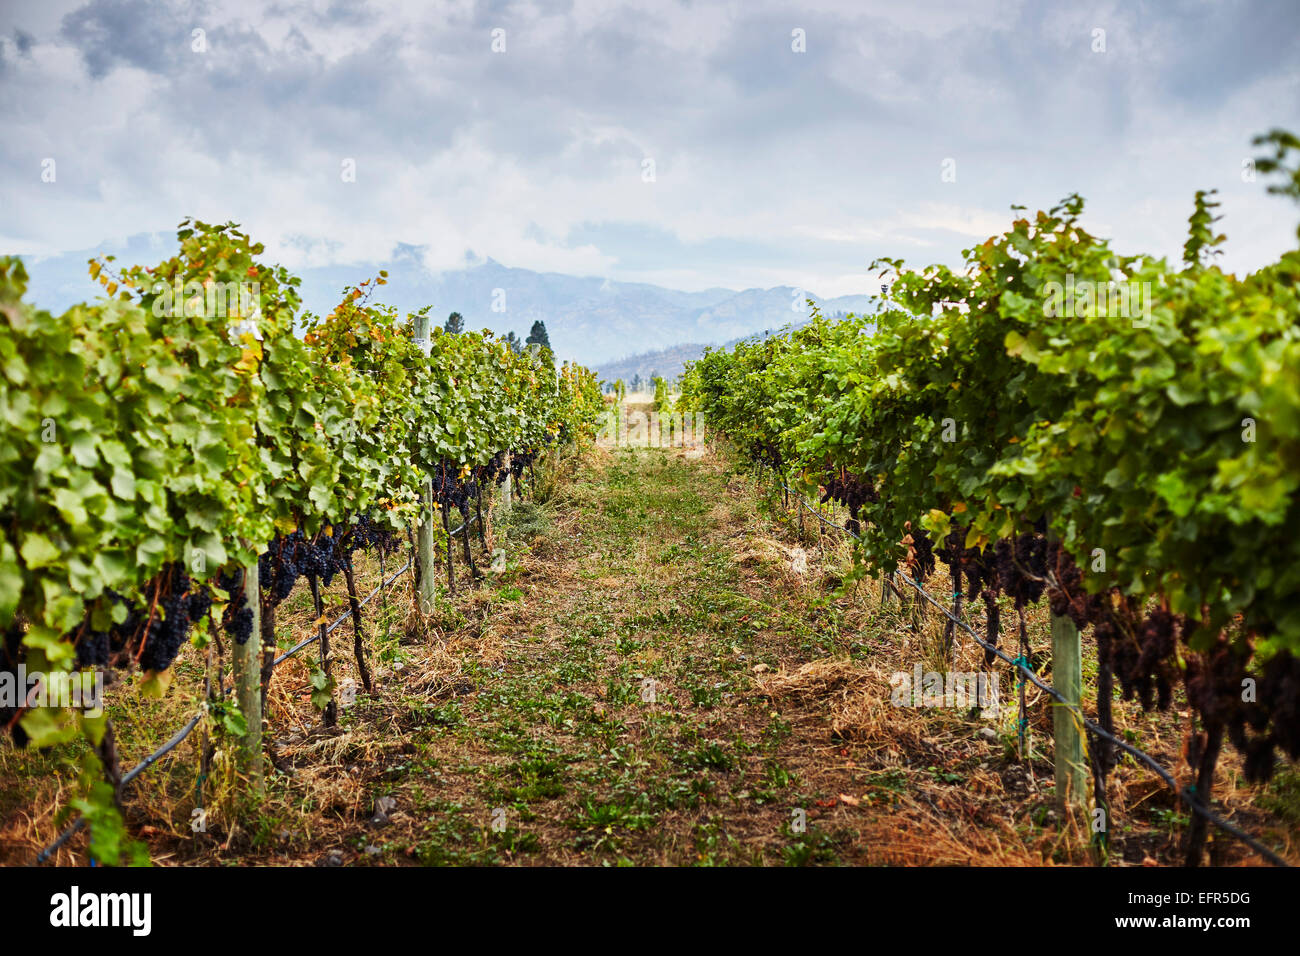 Rows of vines in vineyard, Kelowna, British Columbia, Canada Stock Photo